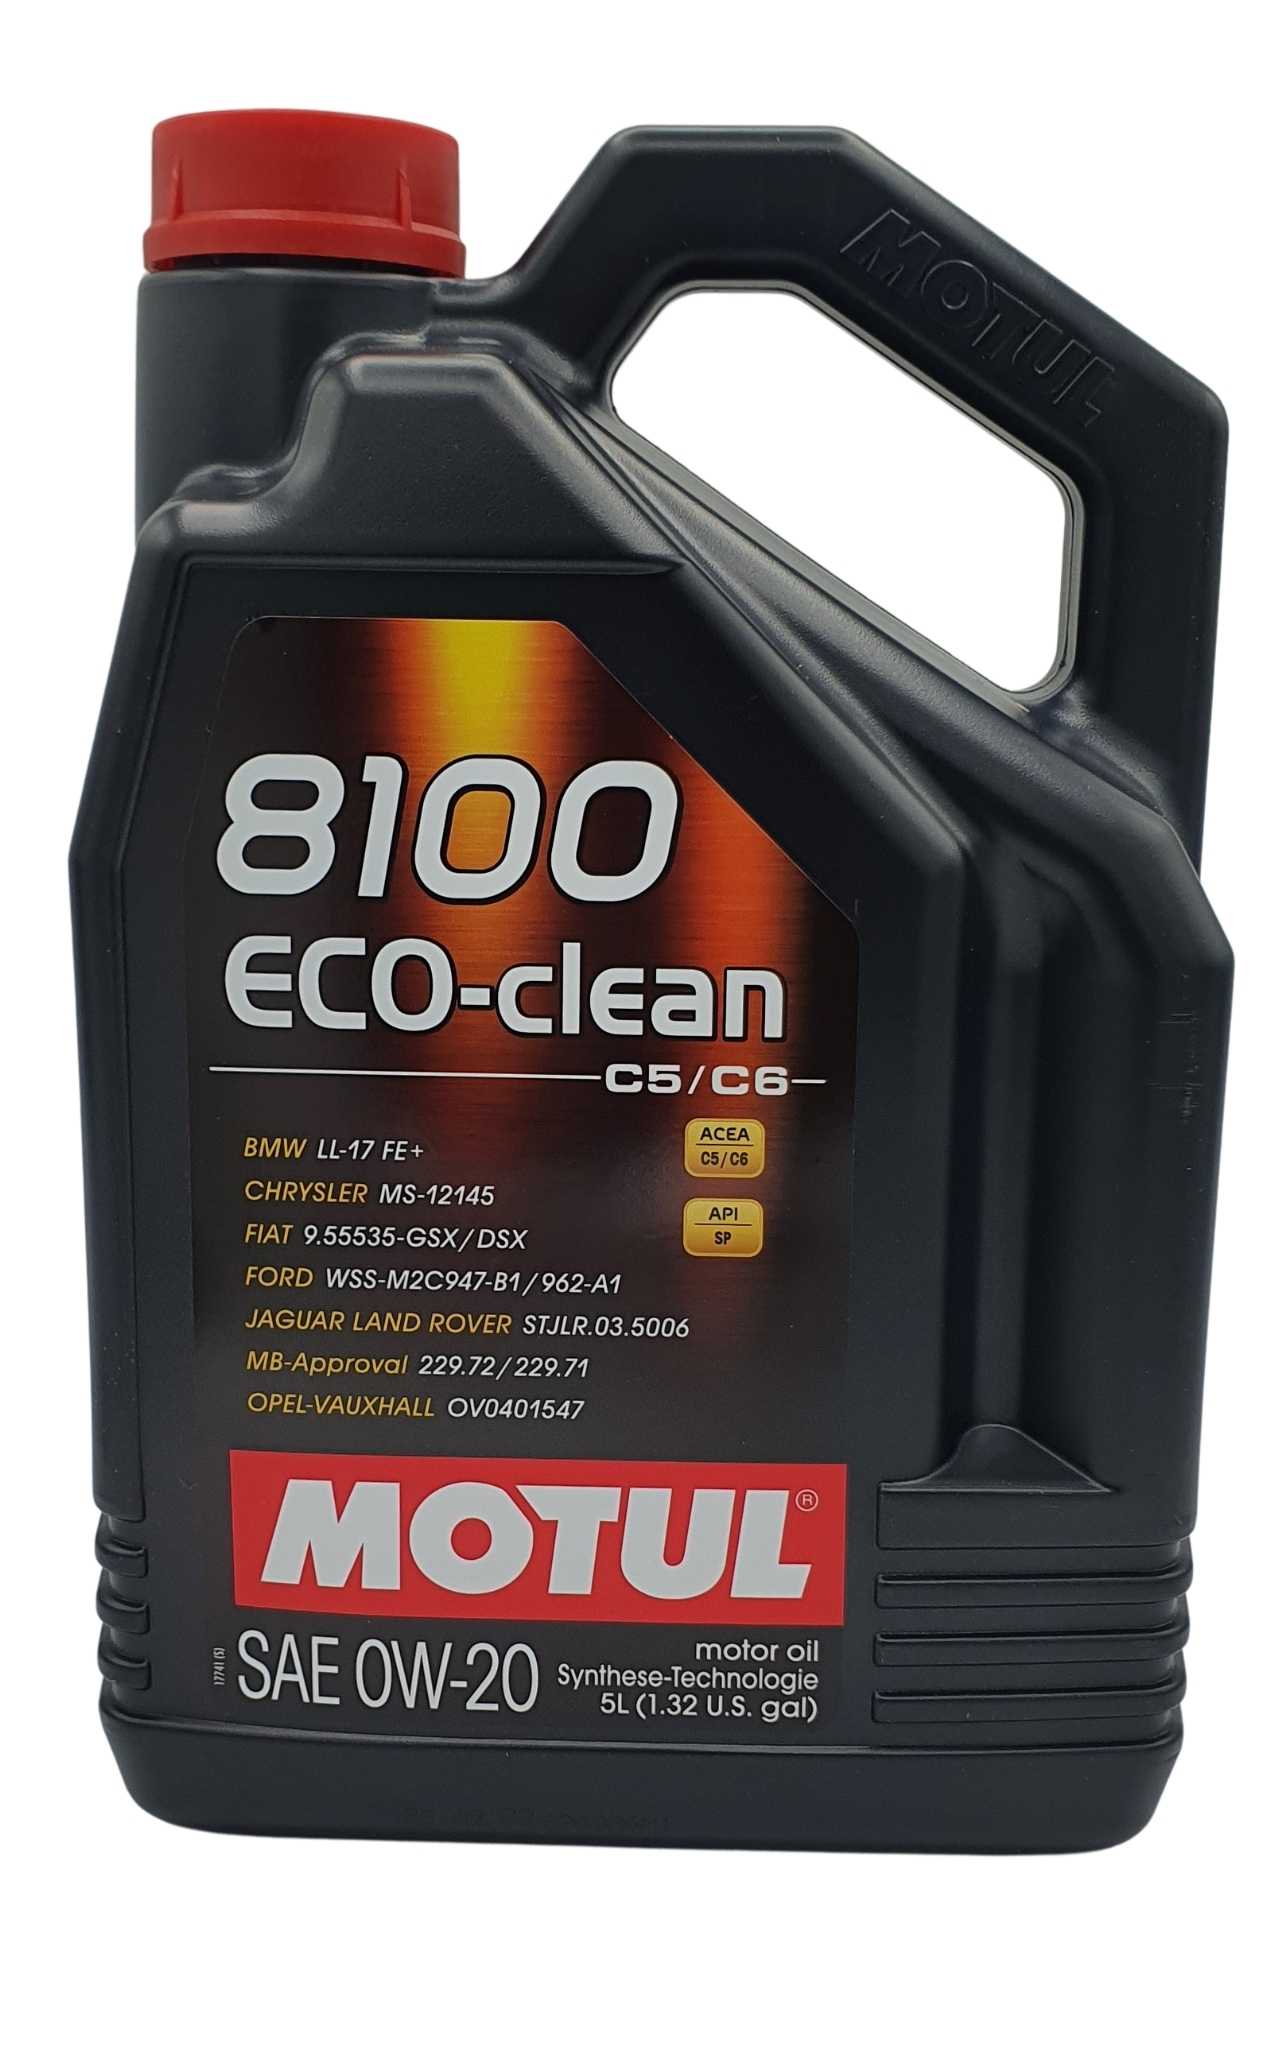 Motul 8100 Eco-clean 0W-20 5 Liter